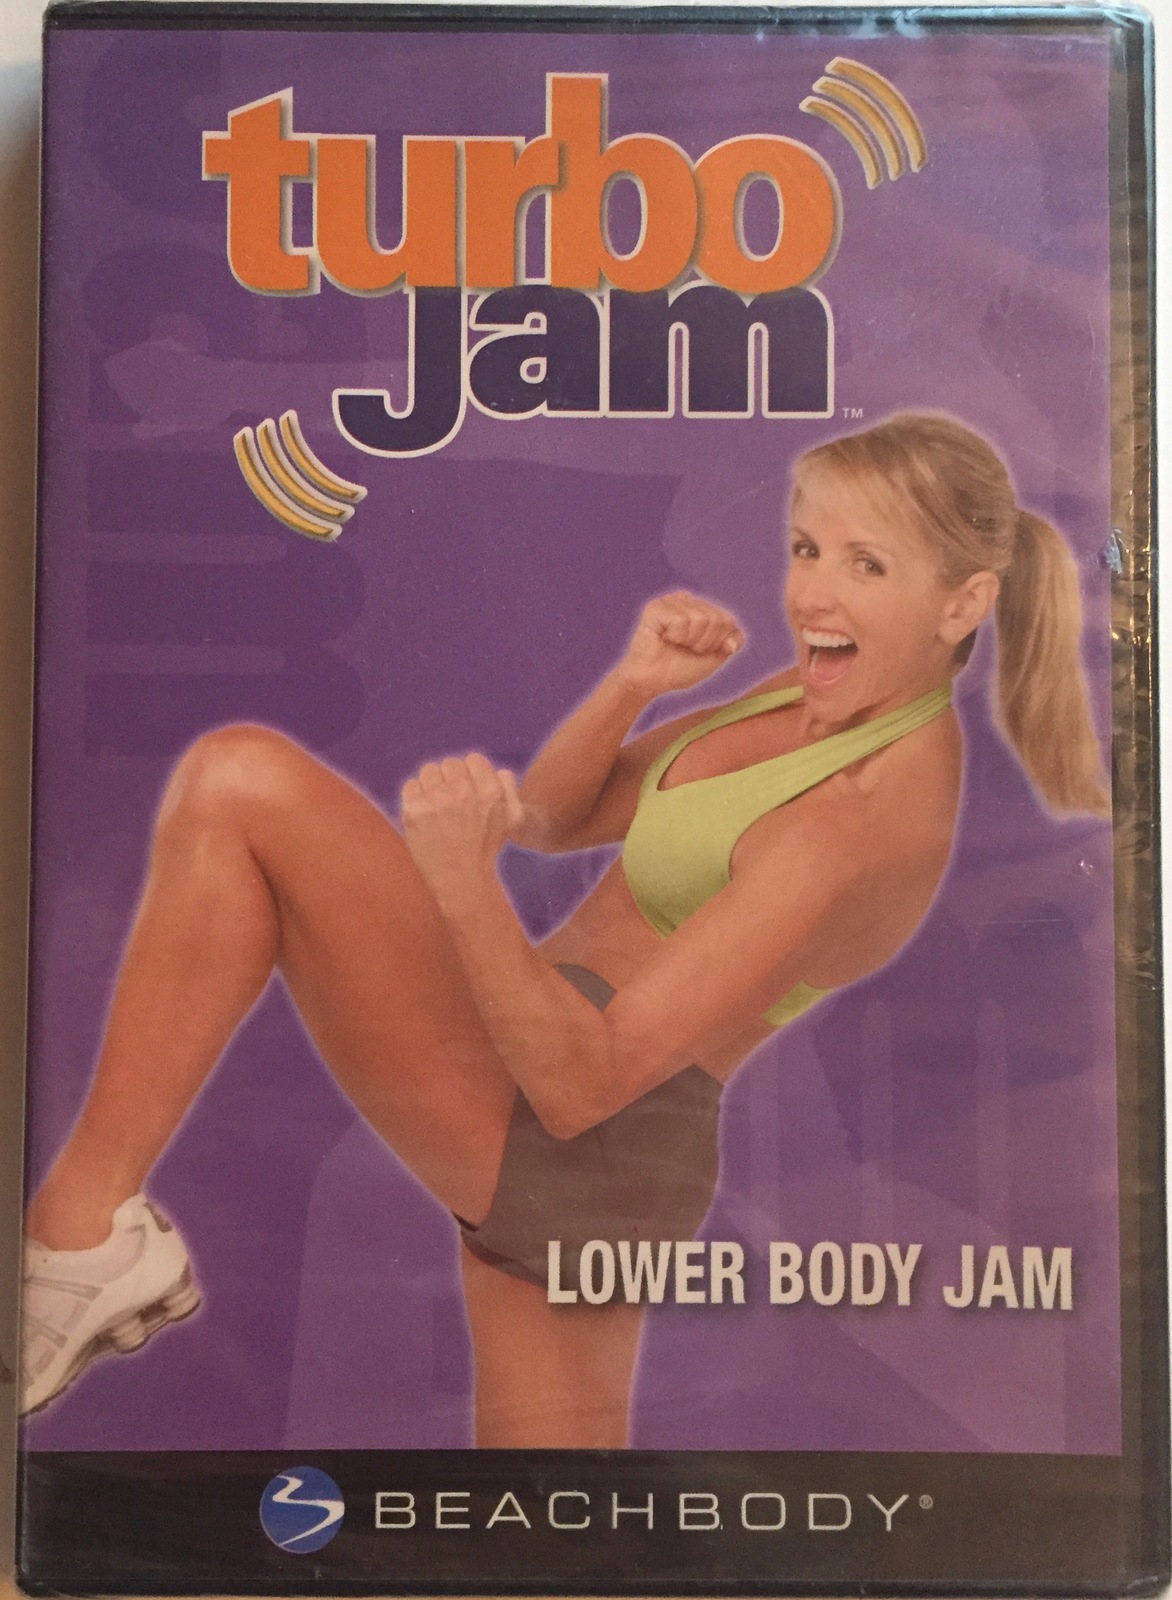 Turbo Jam : Lower Body Jam [DVD] 678026335194 - Beachbody  - $19.99